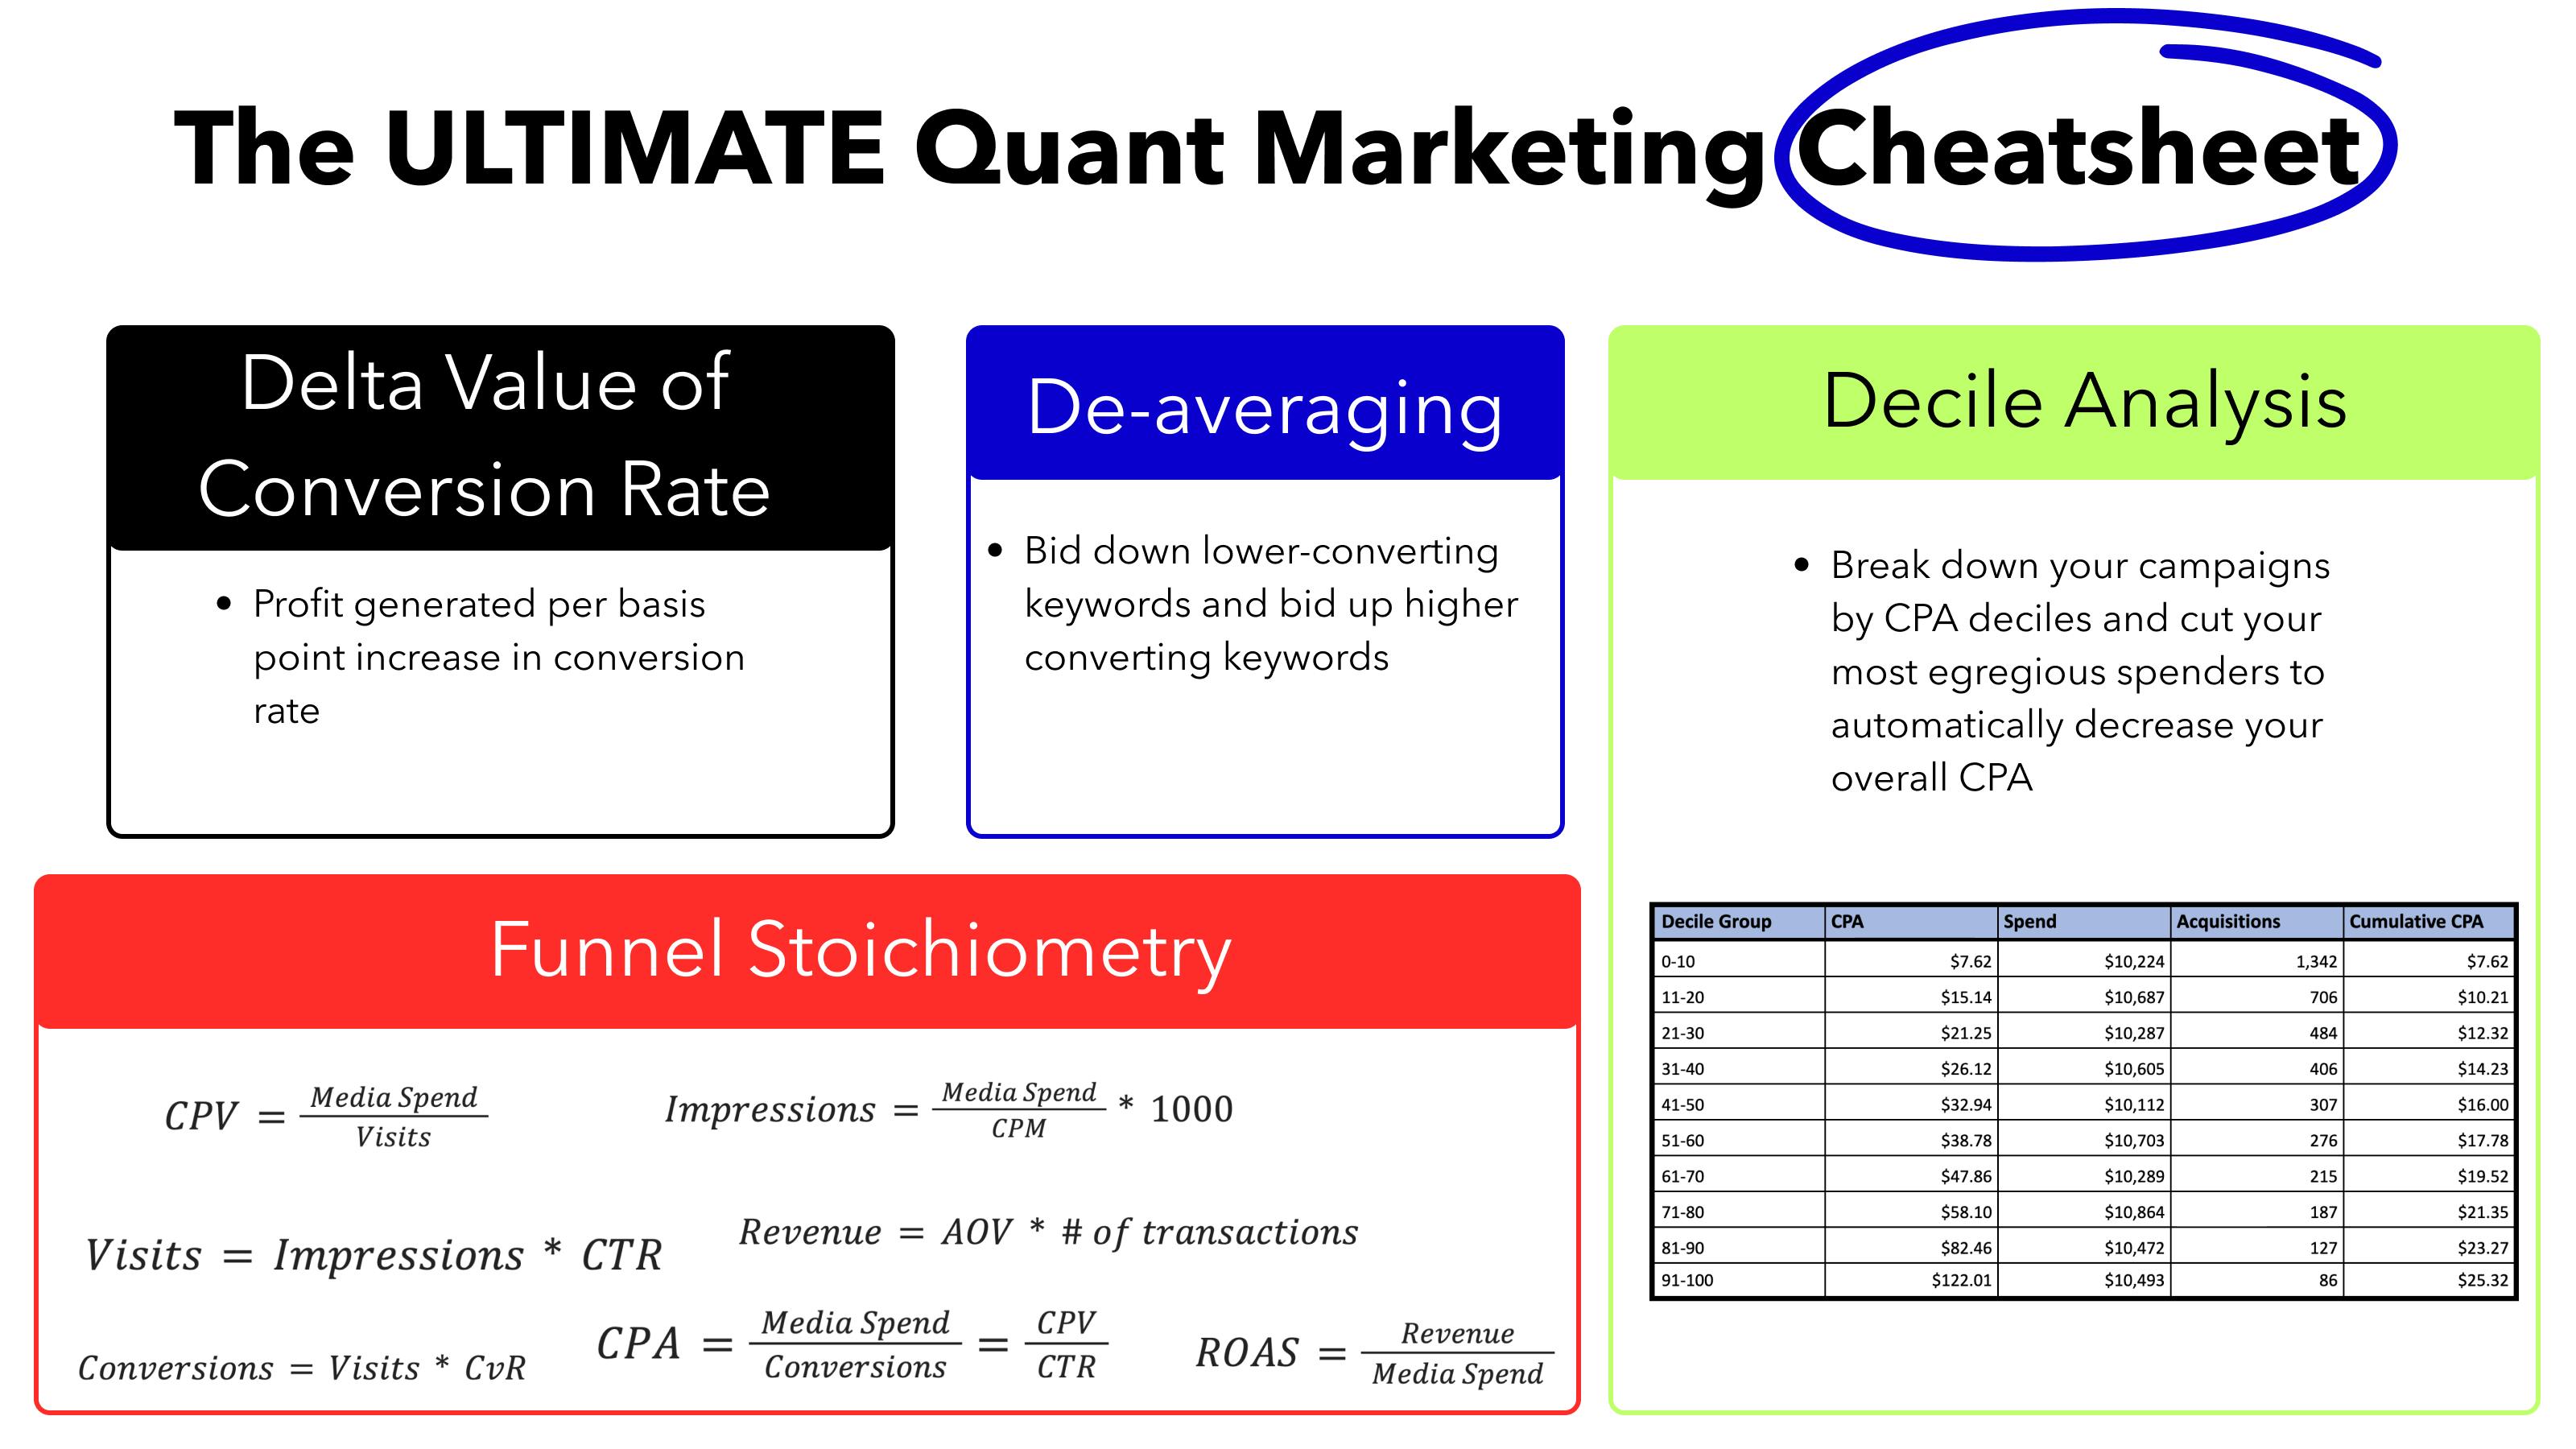 The ULTIMATE Quant Marketing Cheatsheet